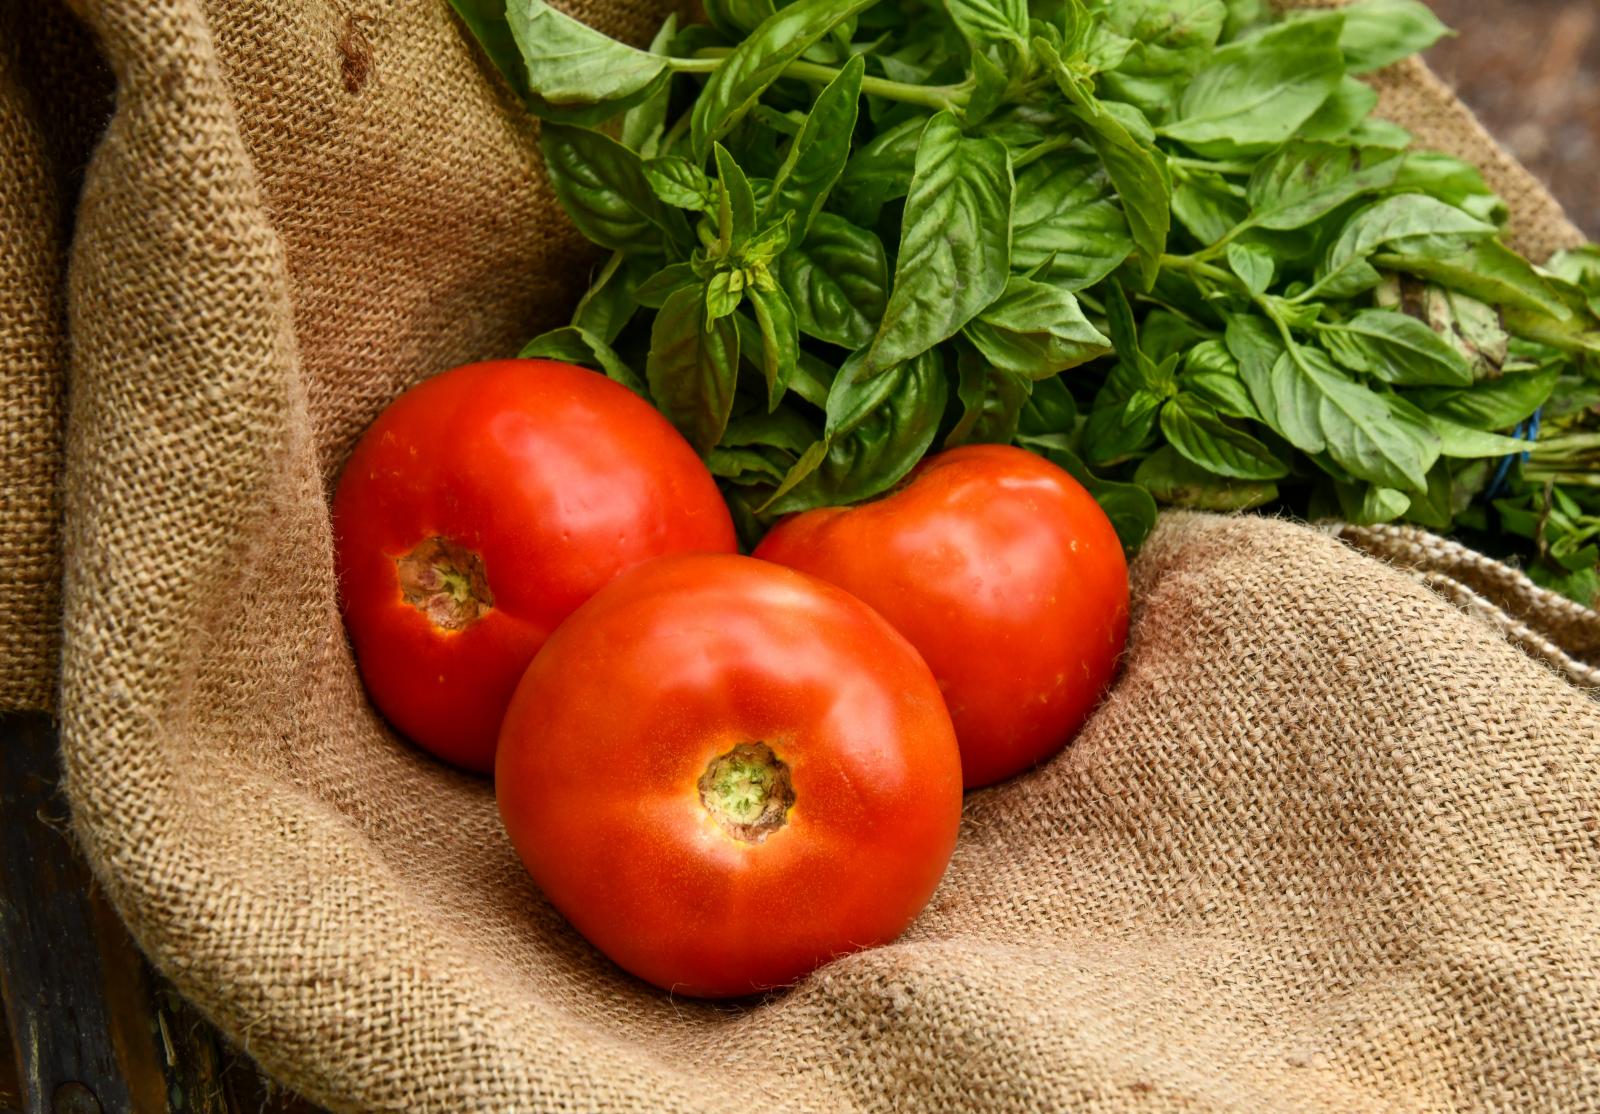 Basil and tomato